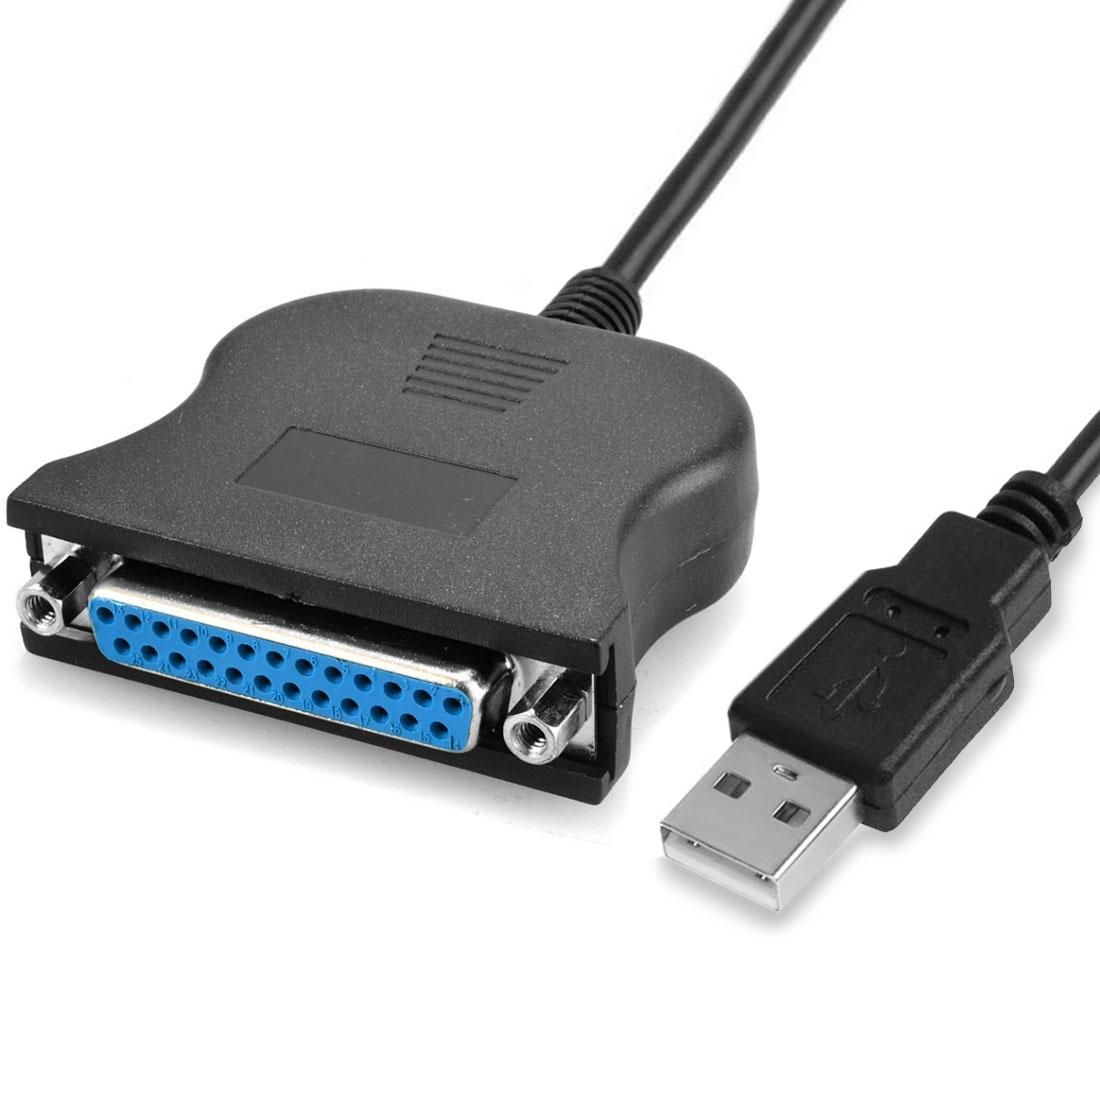 USB 2.0 to DB25 25 Pin Female Port Print Converter Cable (Black)